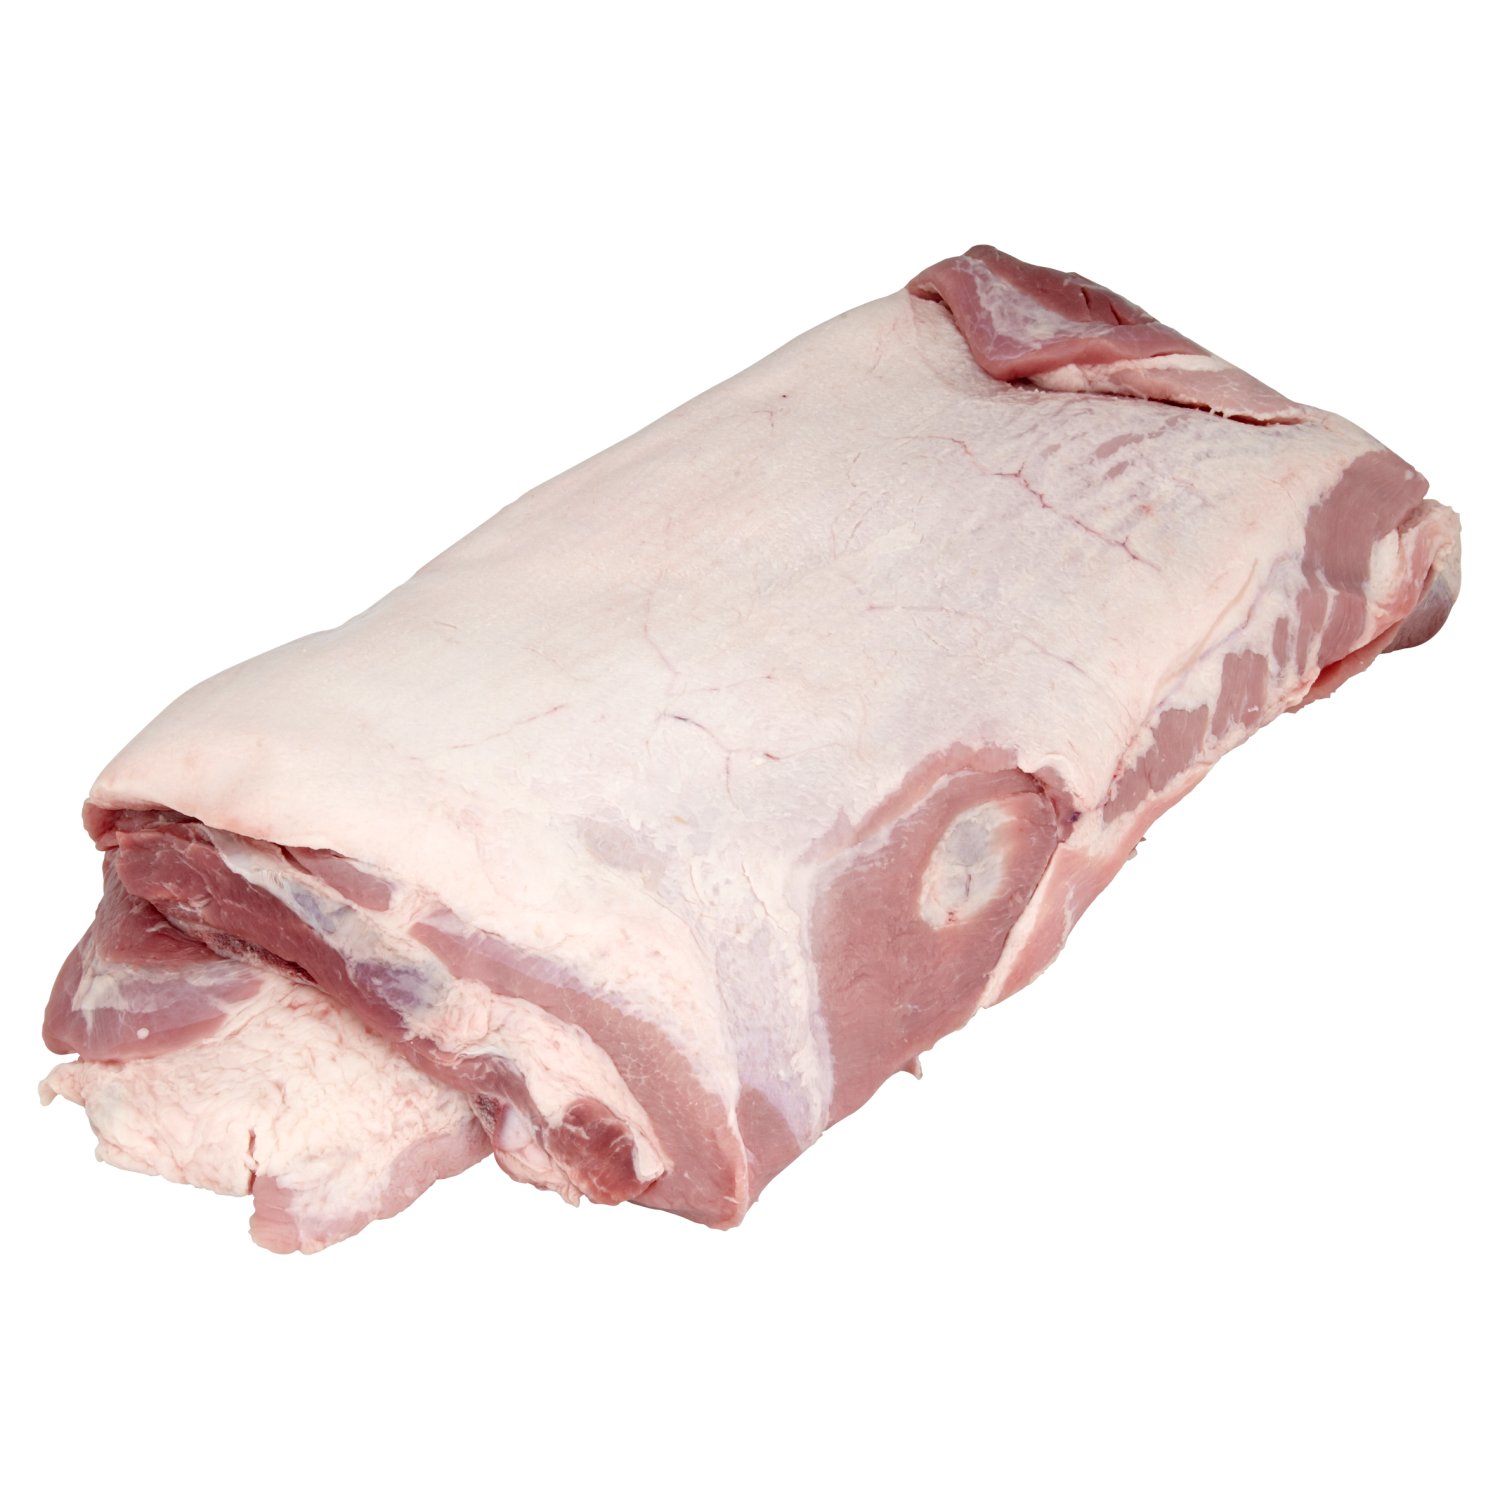 Pork Belly Bone In Butcher Counter (1 kg)